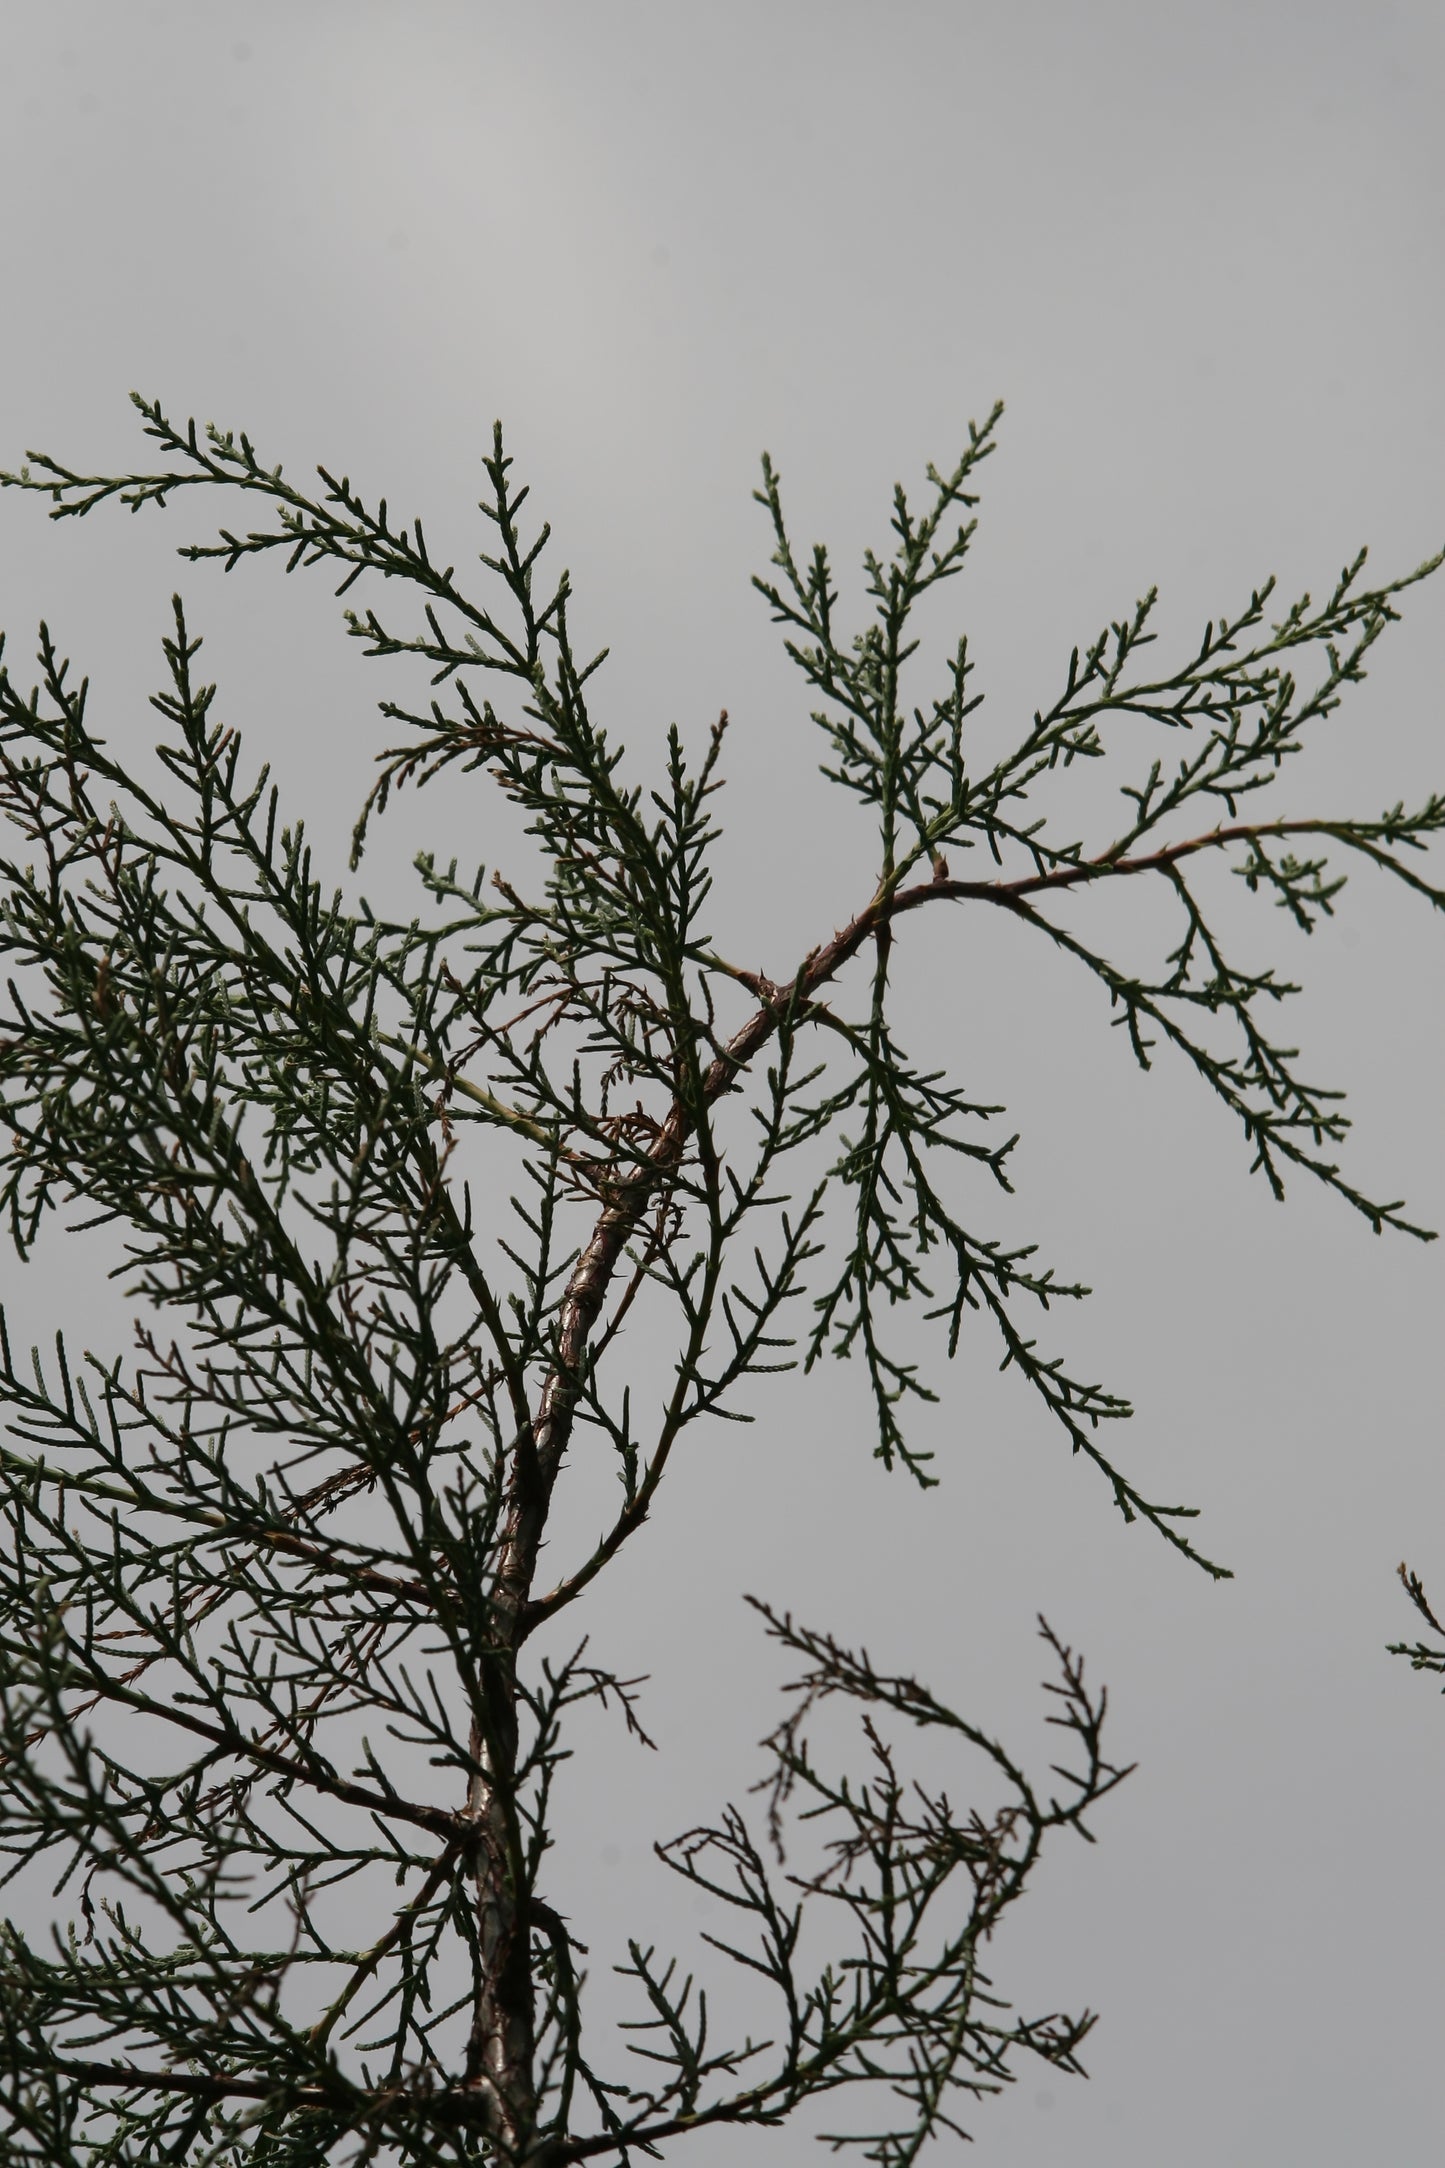 Piute Cypress (Hesperocyparis nevadensis)